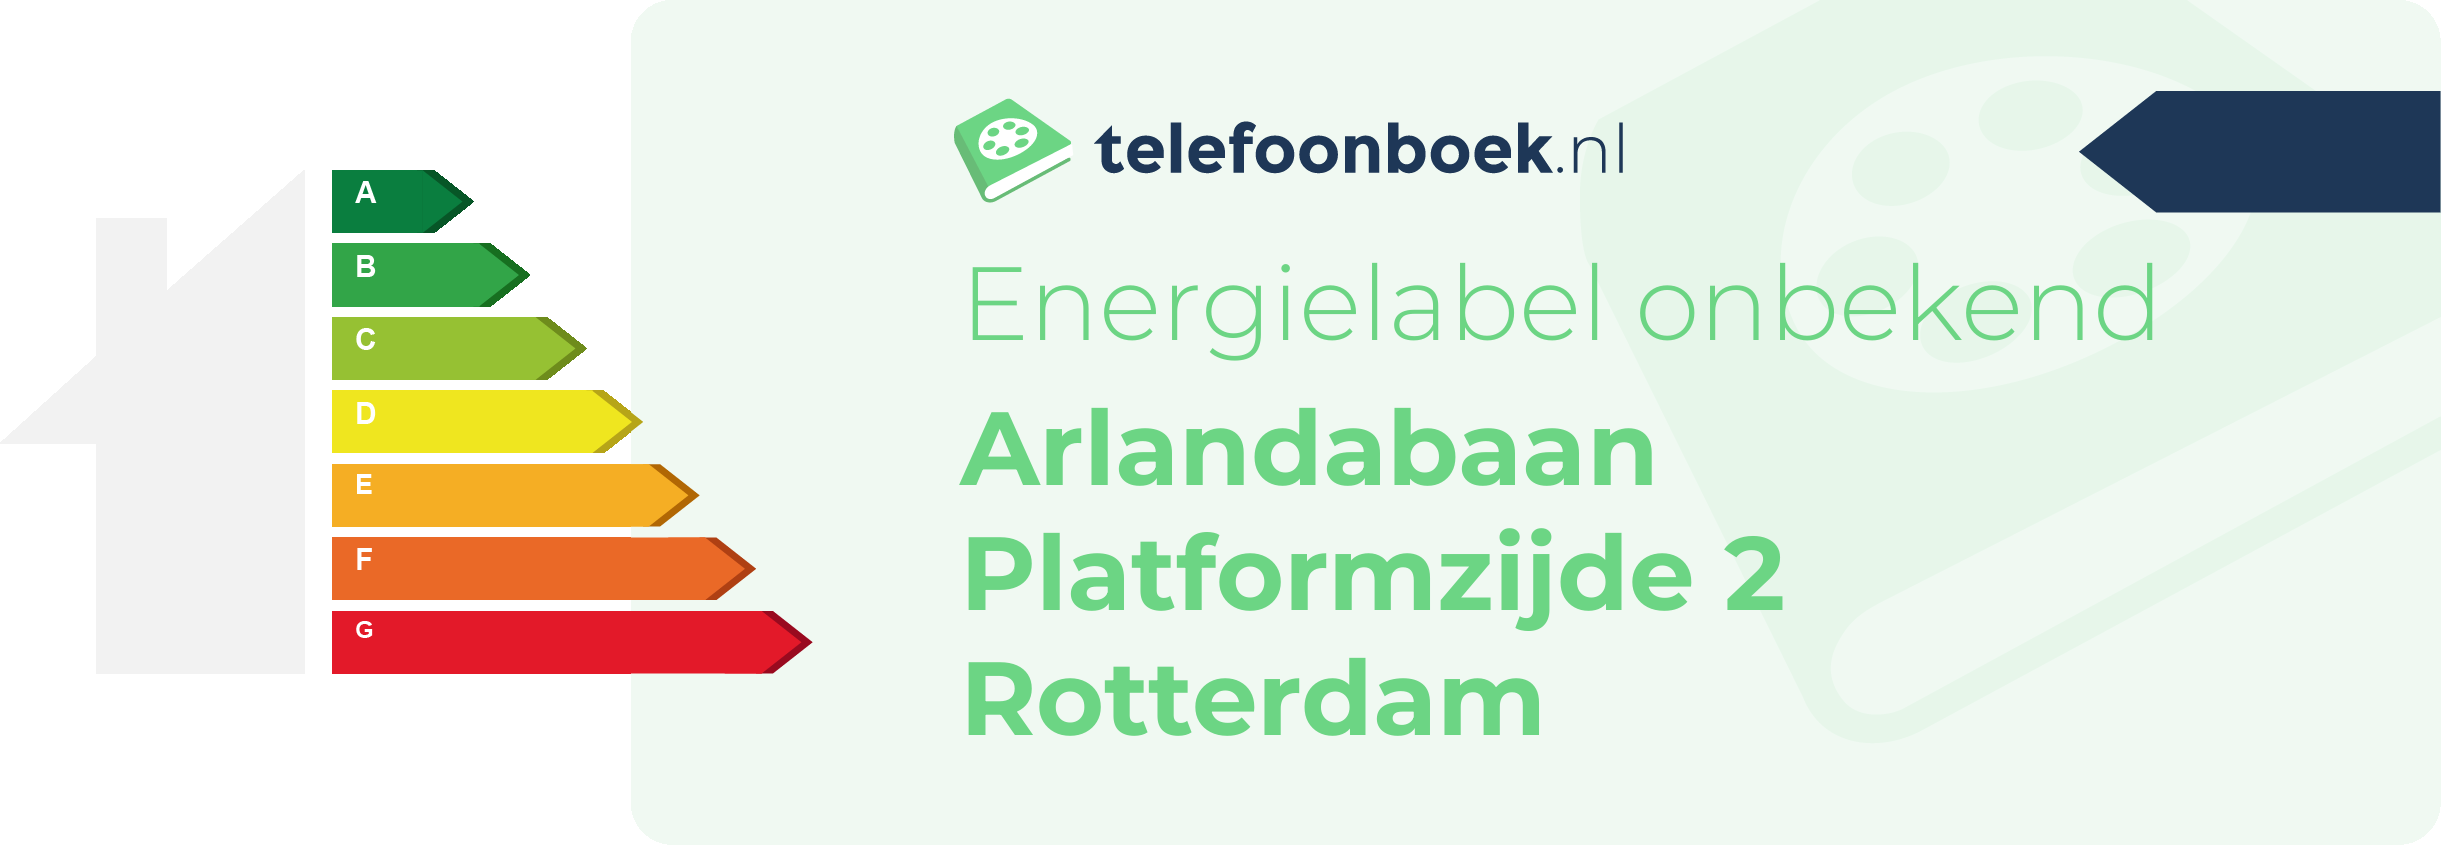 Energielabel Arlandabaan Platformzijde 2 Rotterdam